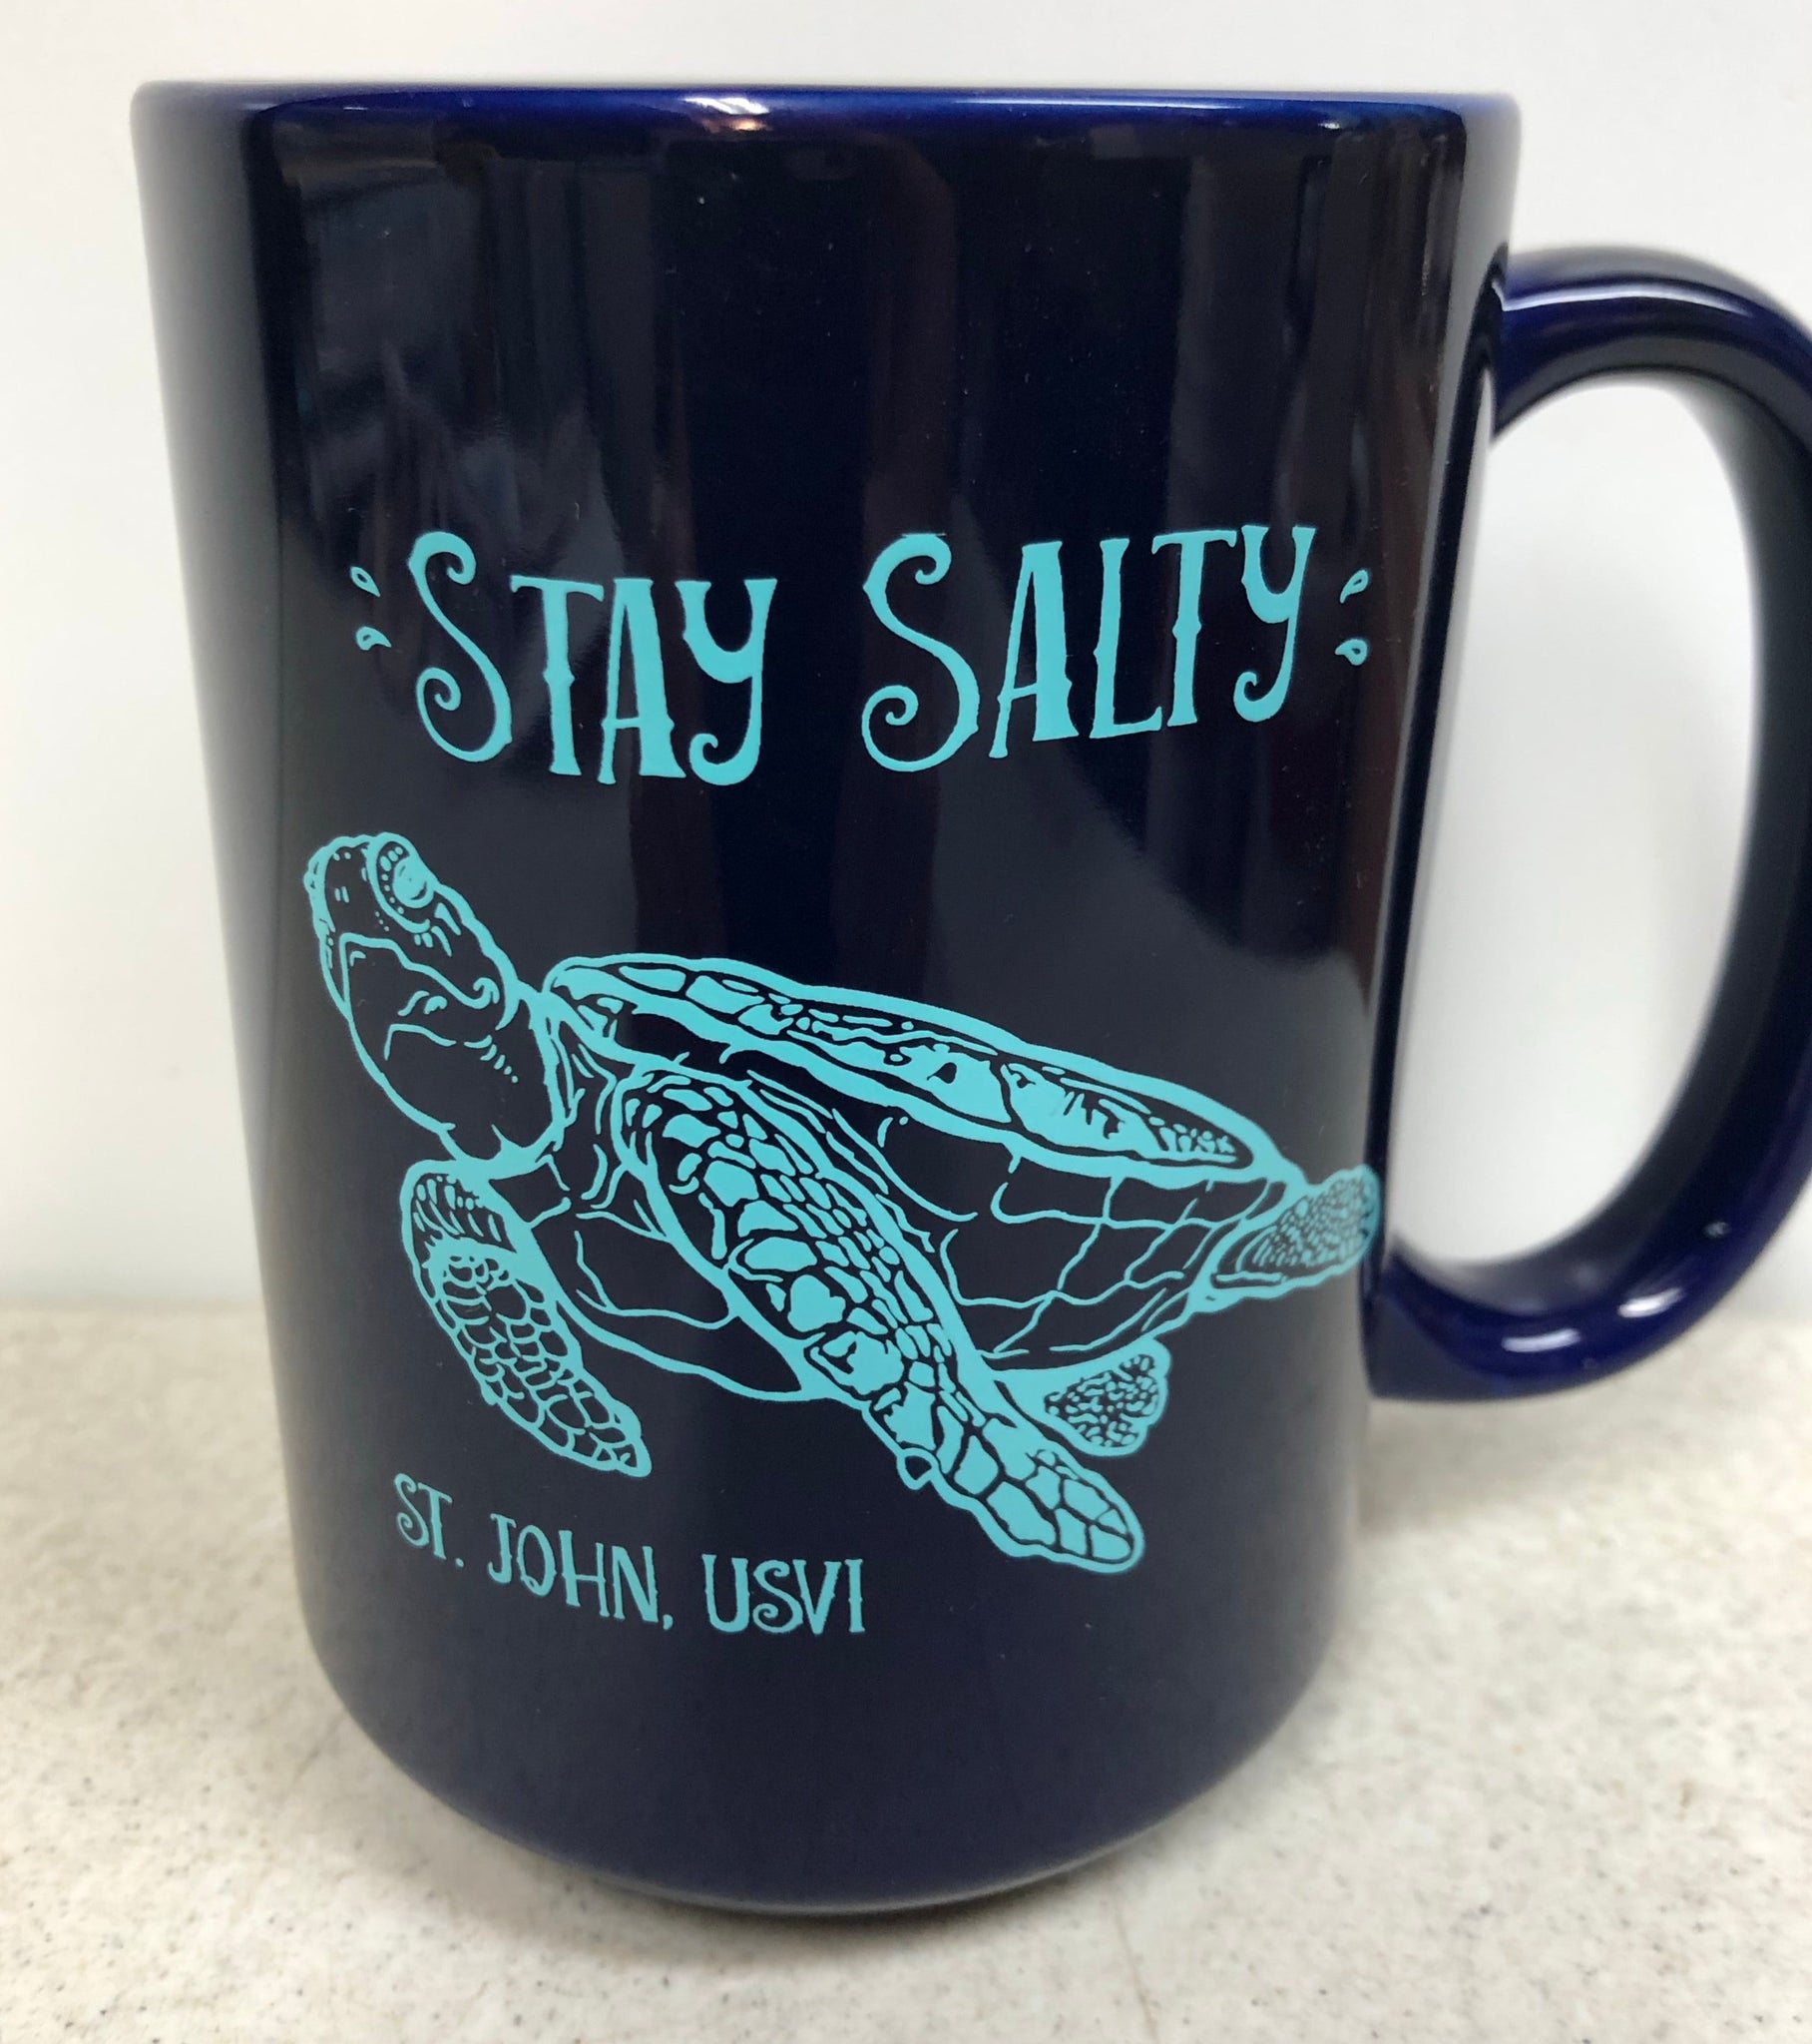 Stay Salty St. John, USVI  Mug